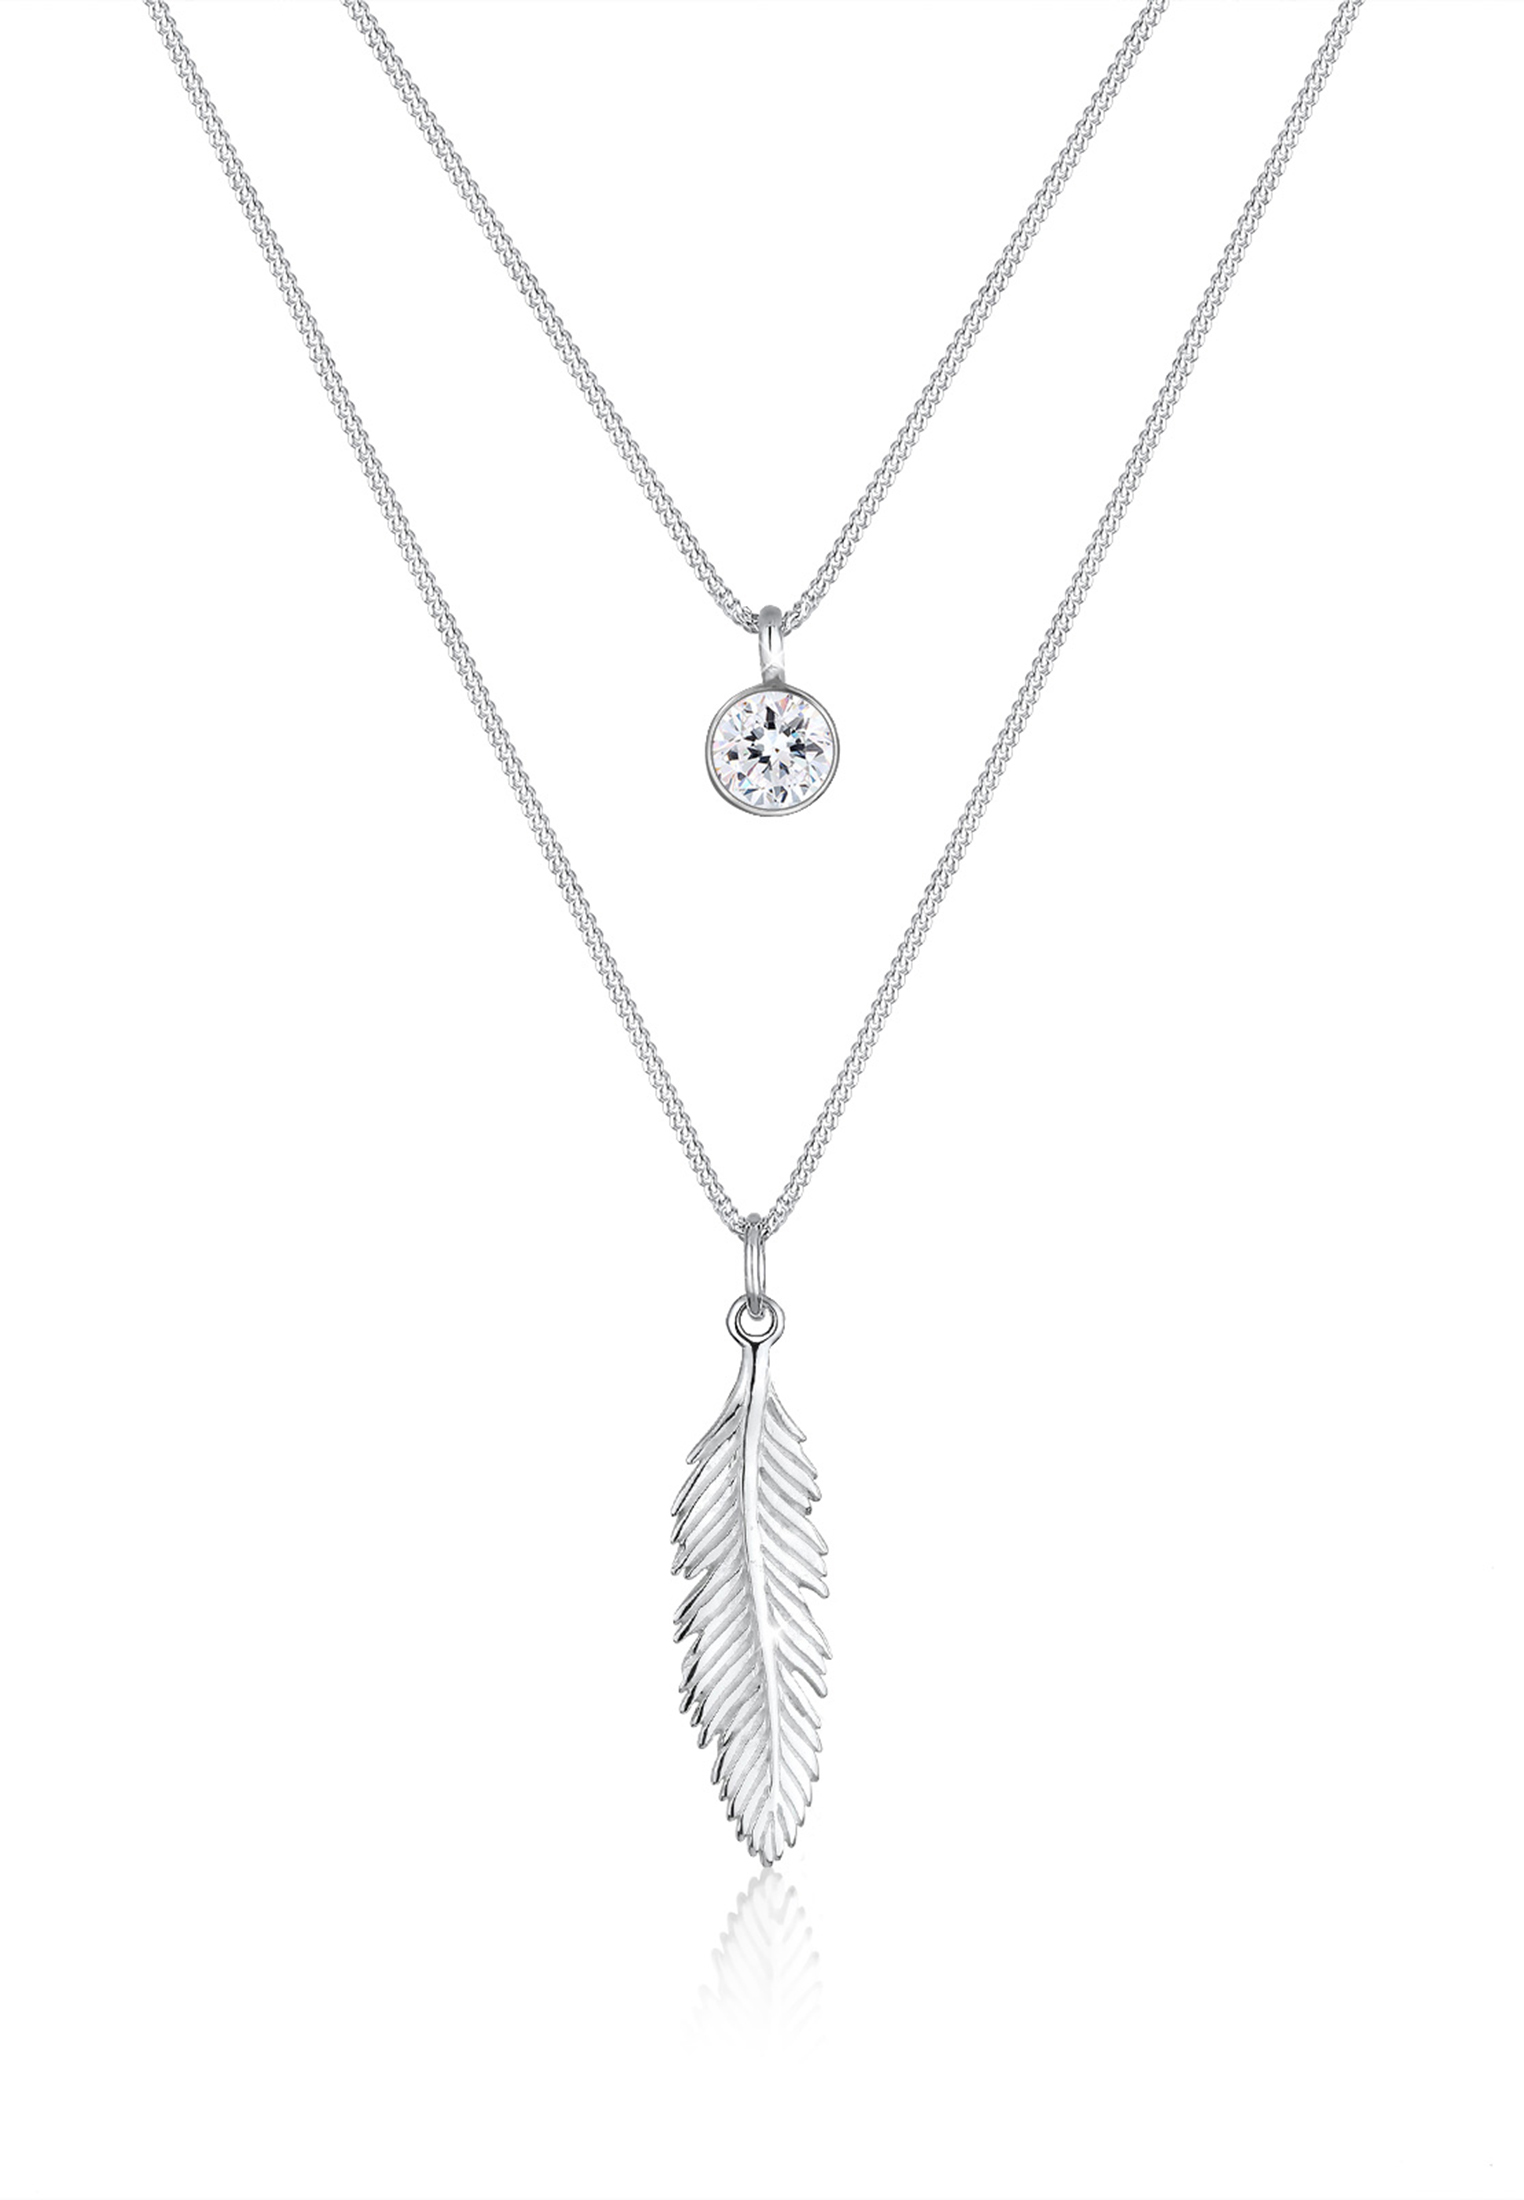 Layer-Halskette Feder & Solitär | Kristall (Weiß) | 925er Sterling Silber